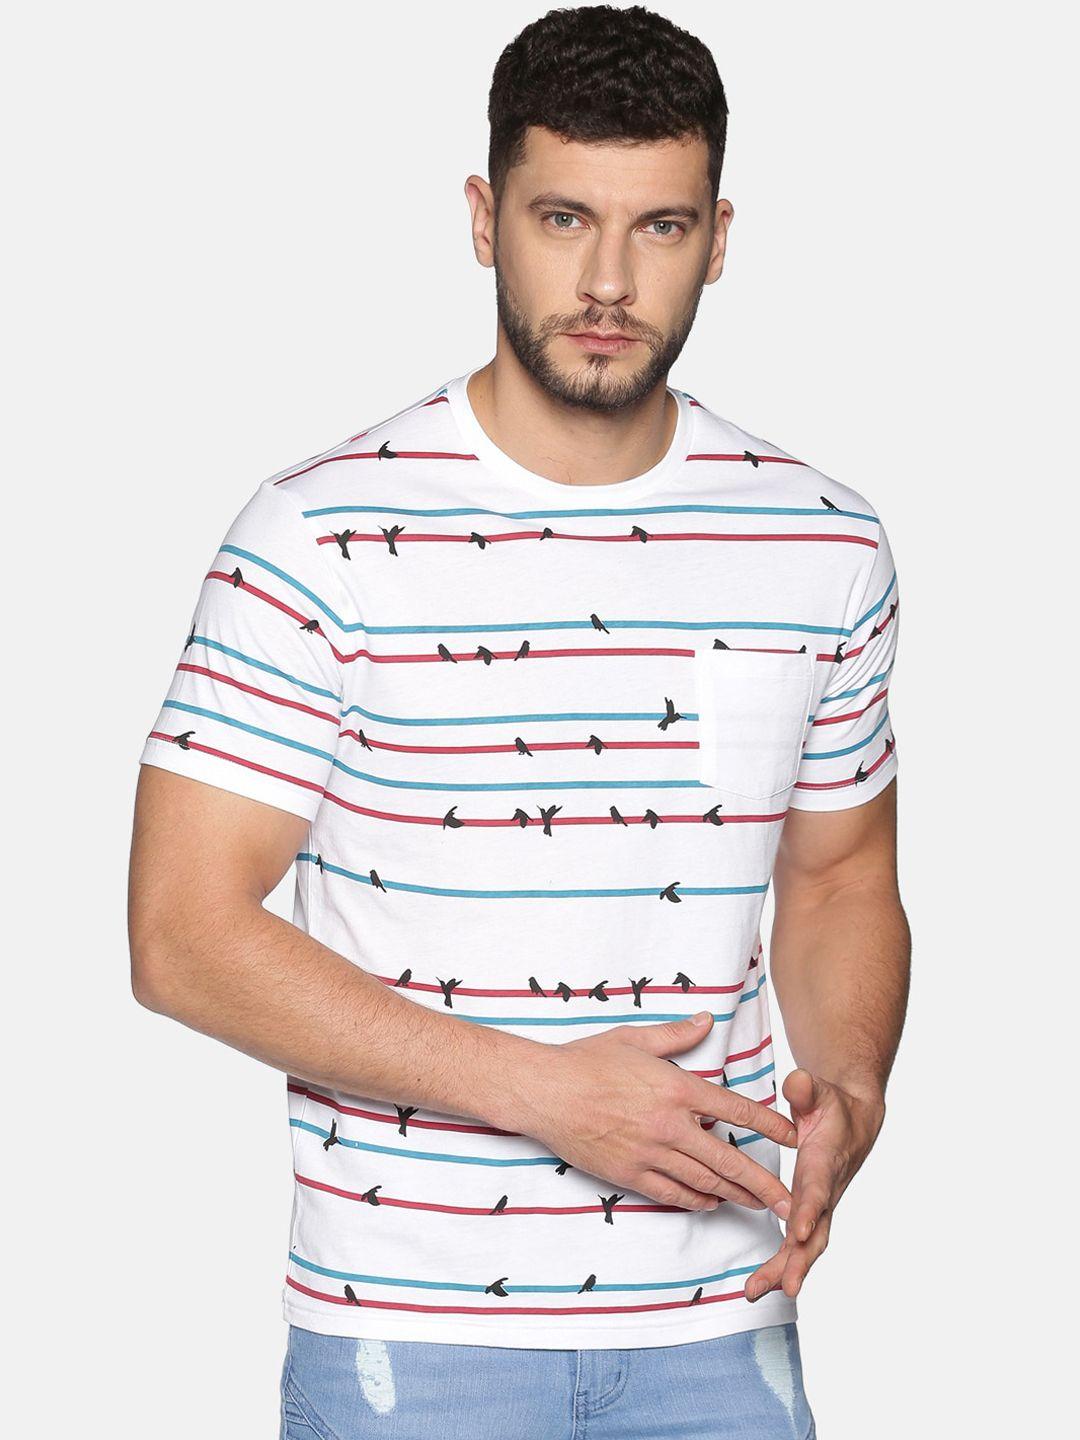 urgear men white striped round neck cotton pure cotton t-shirt